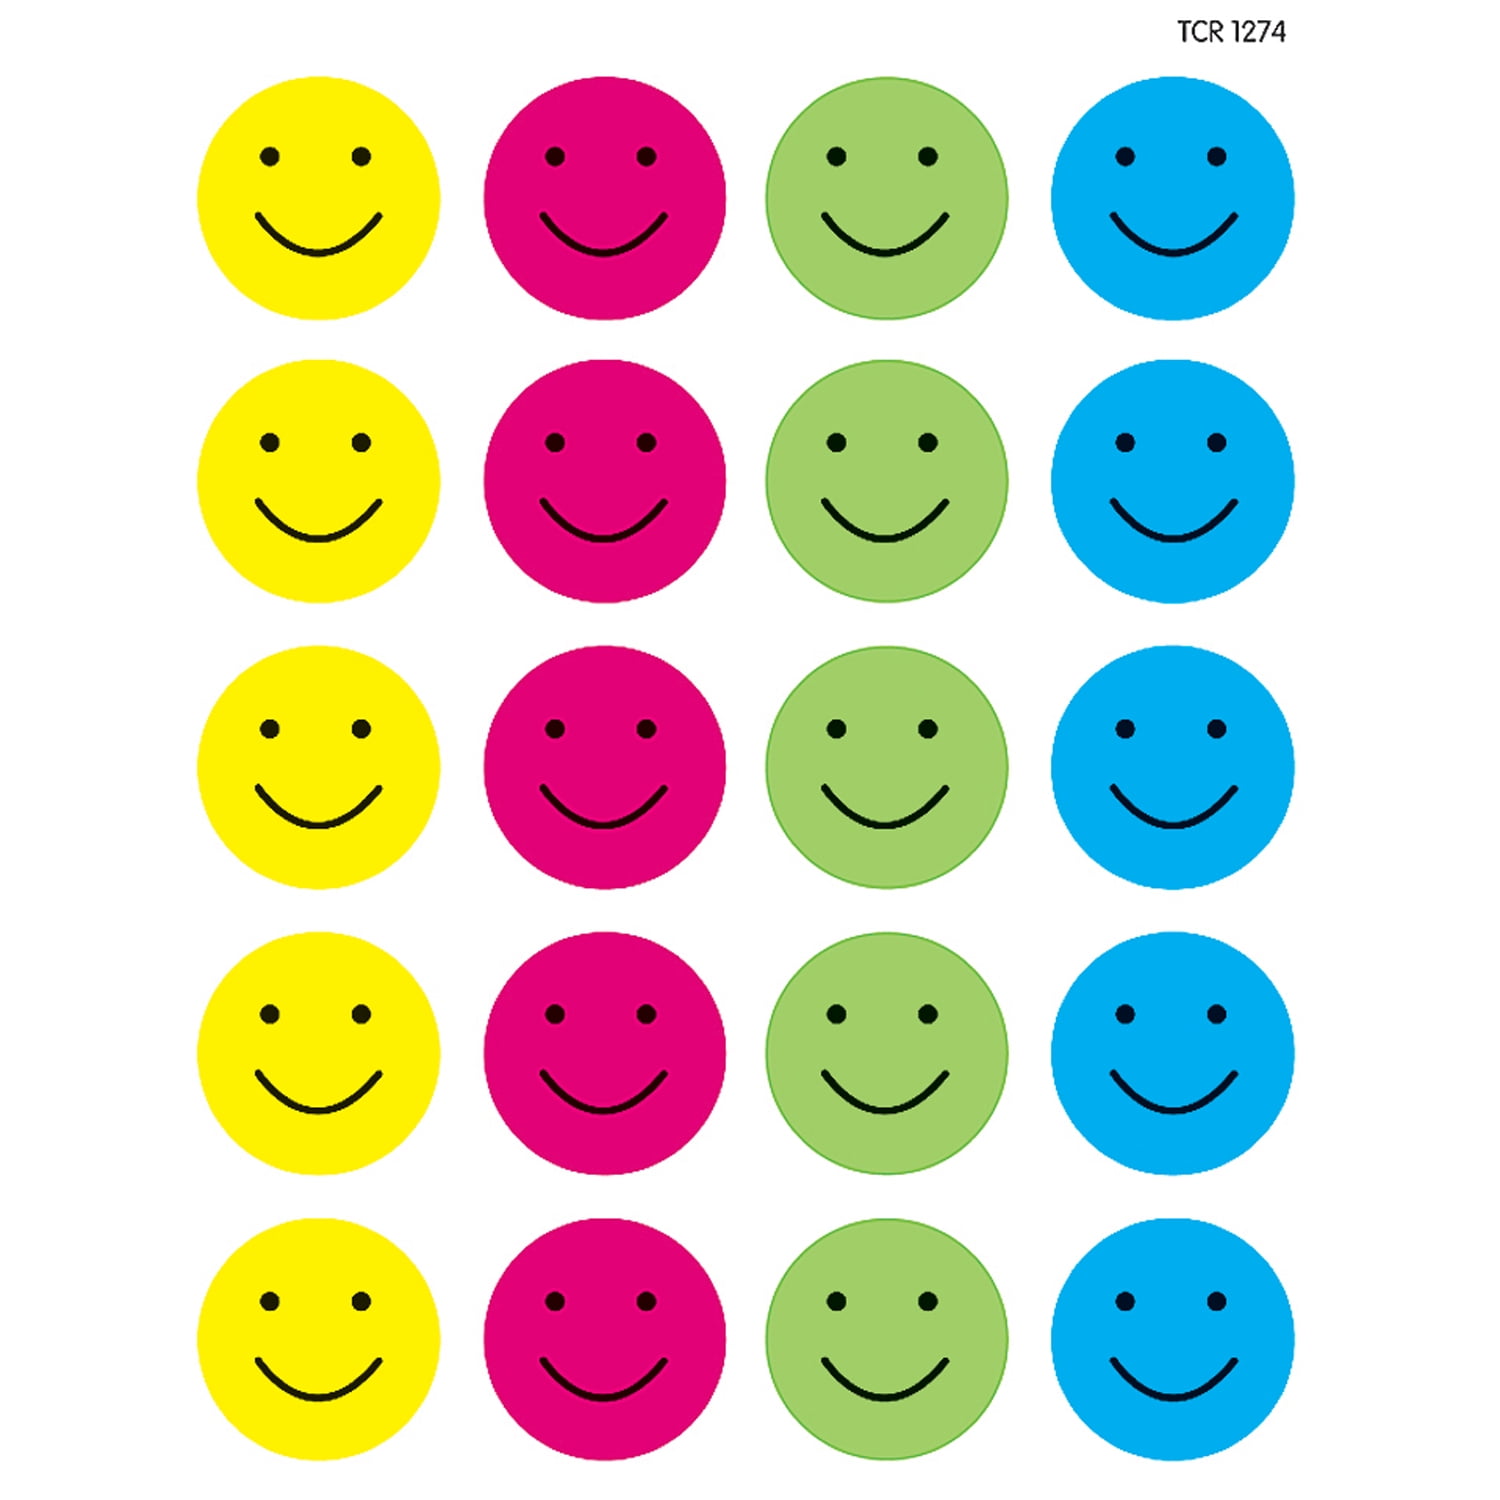 650 Children's Reward Stickers Smiley Faces Bright Colour For School/Home 6811 